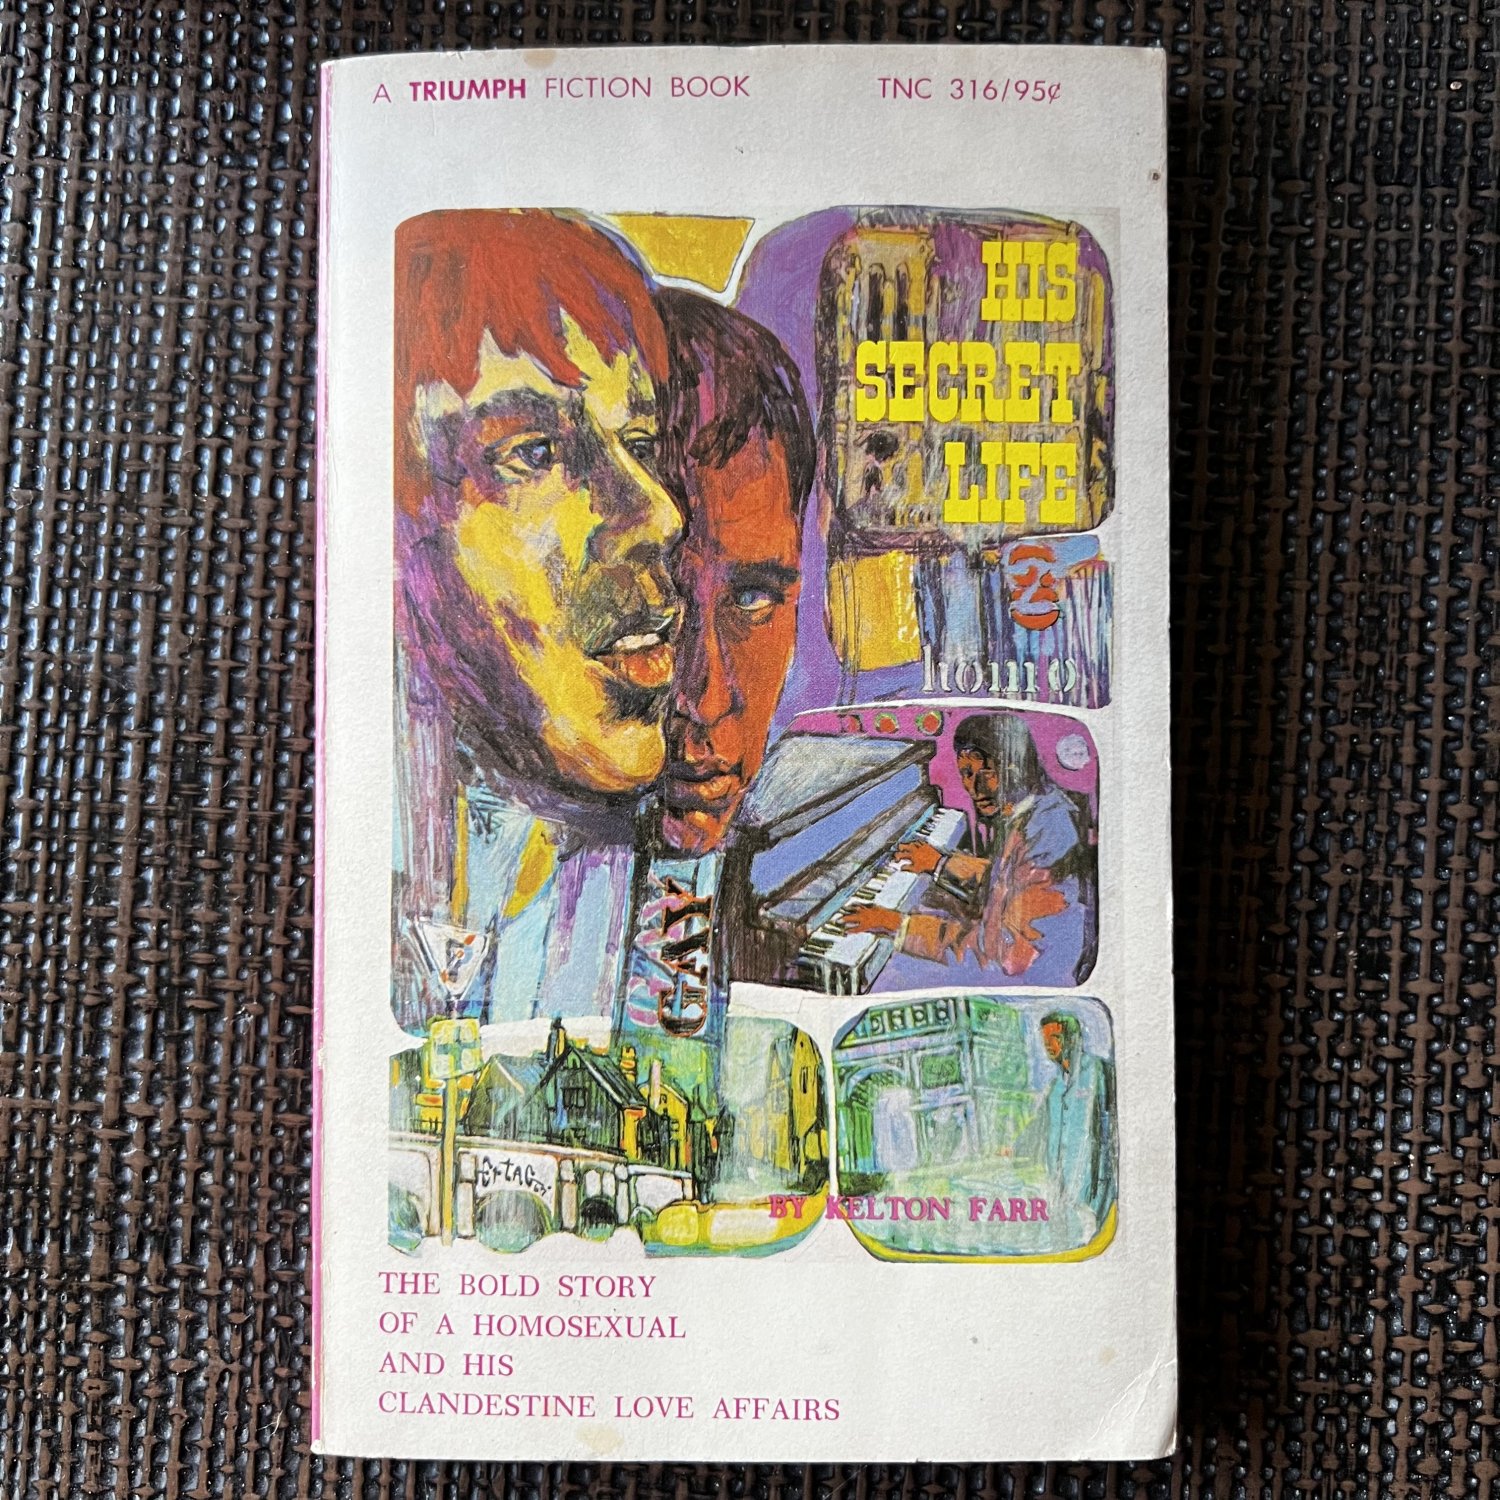 His Secret Life 1968 Kelton Farr Tnc 316 Triumph News Fiction Novel Pb Homosexual Gay Pulp Art 2268